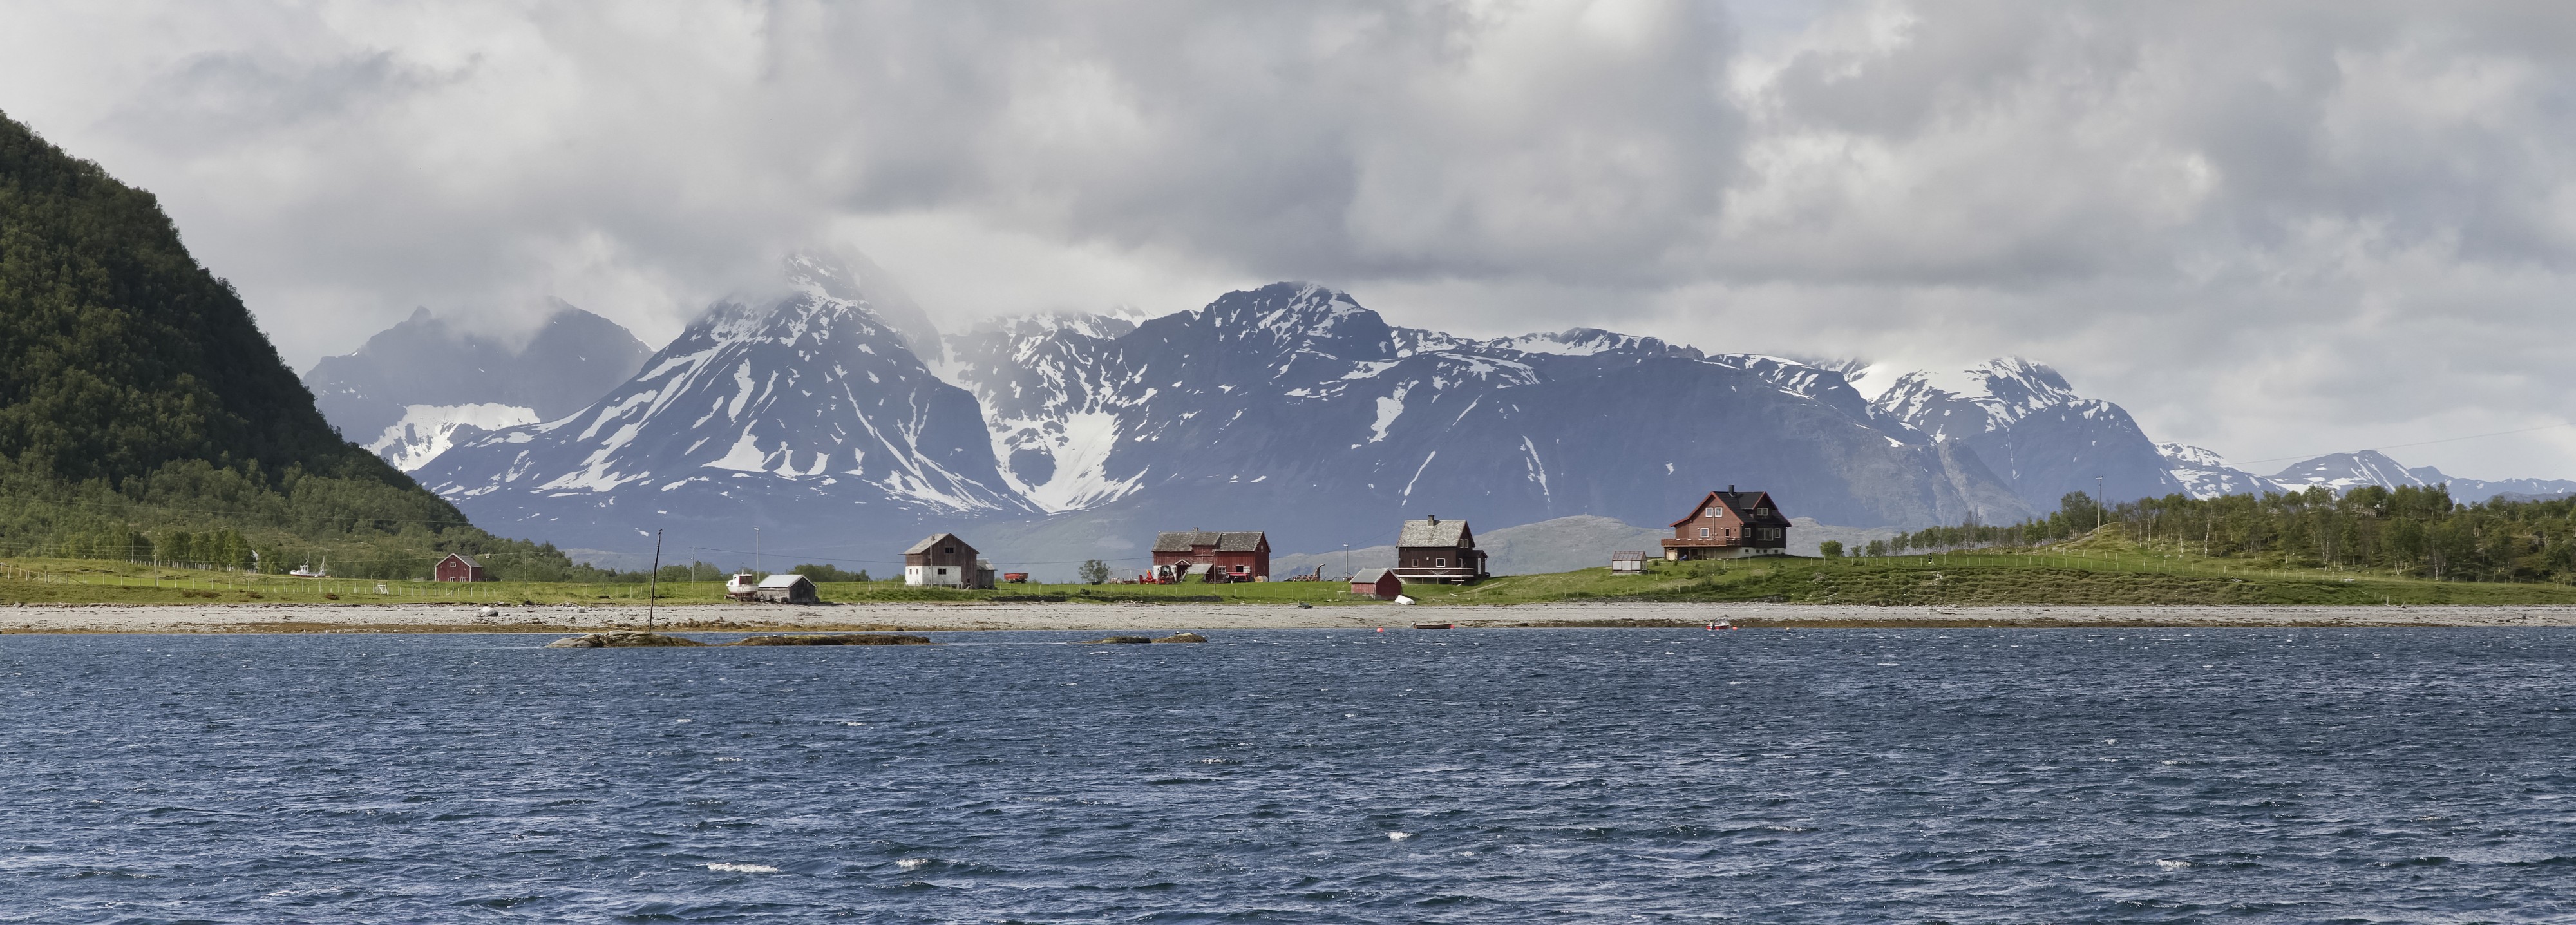 Houses of Sørneset and mountains of Kågen, 2012 June